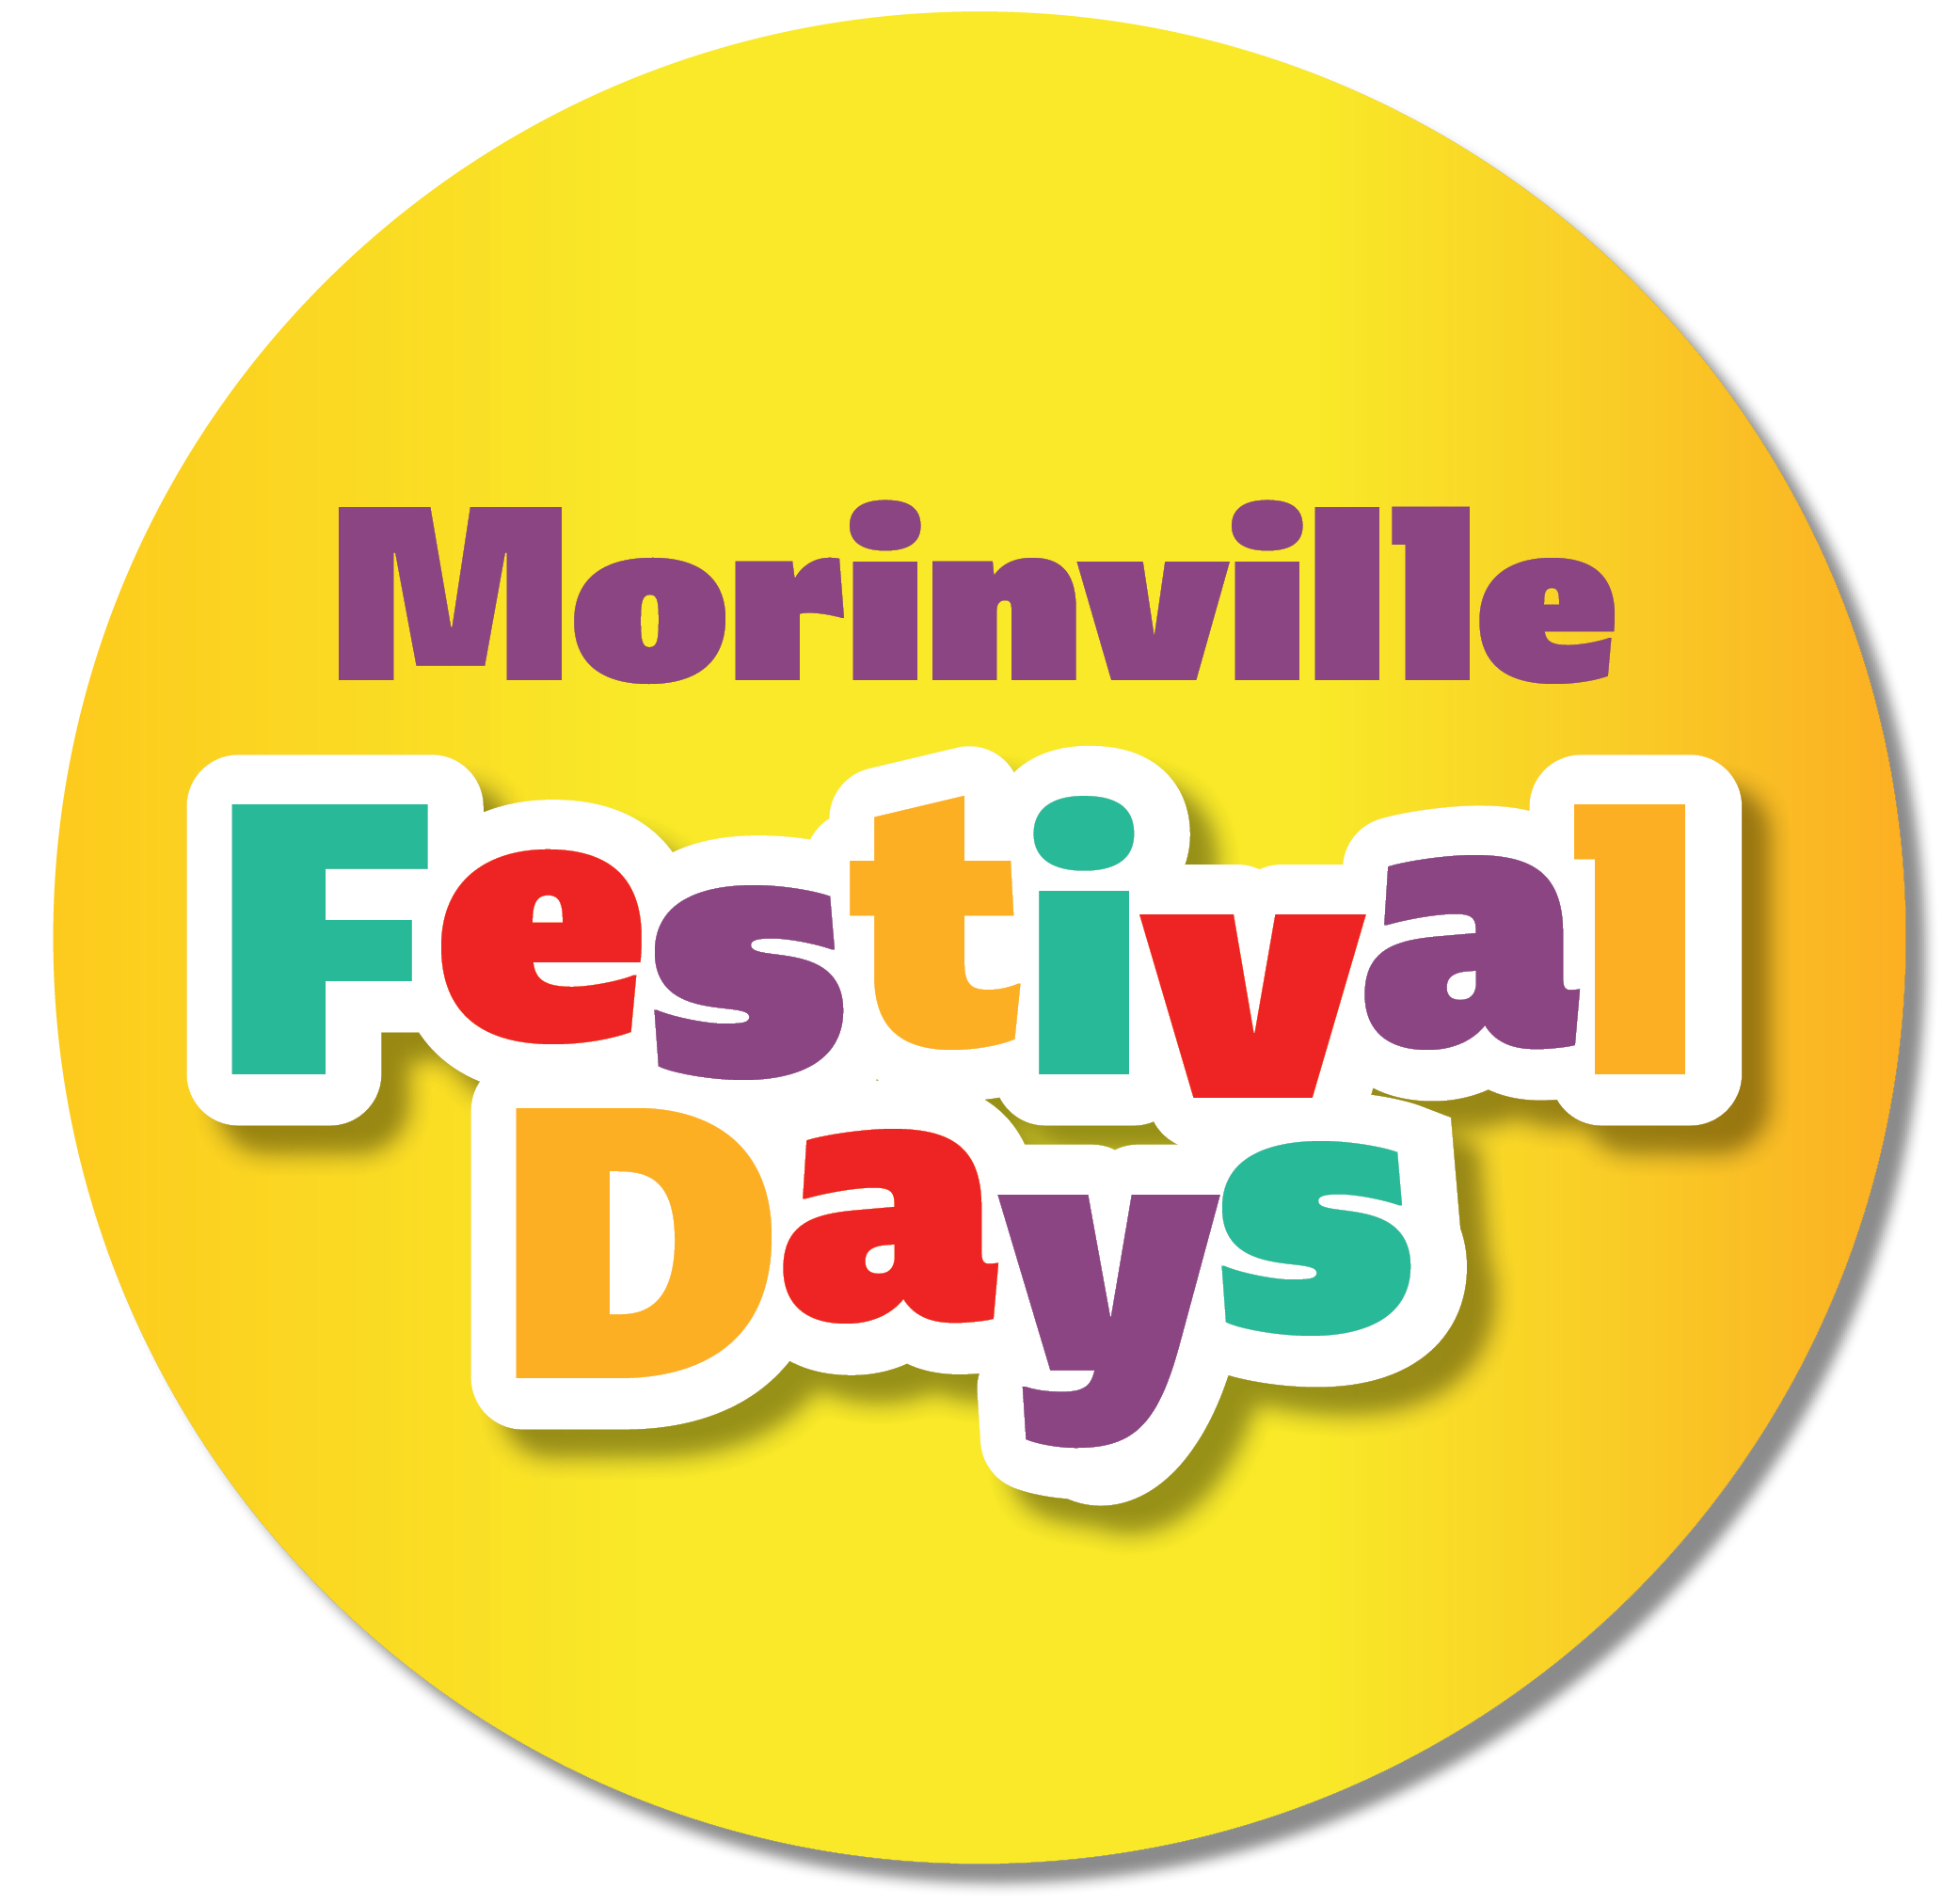 Morinville Festival Days